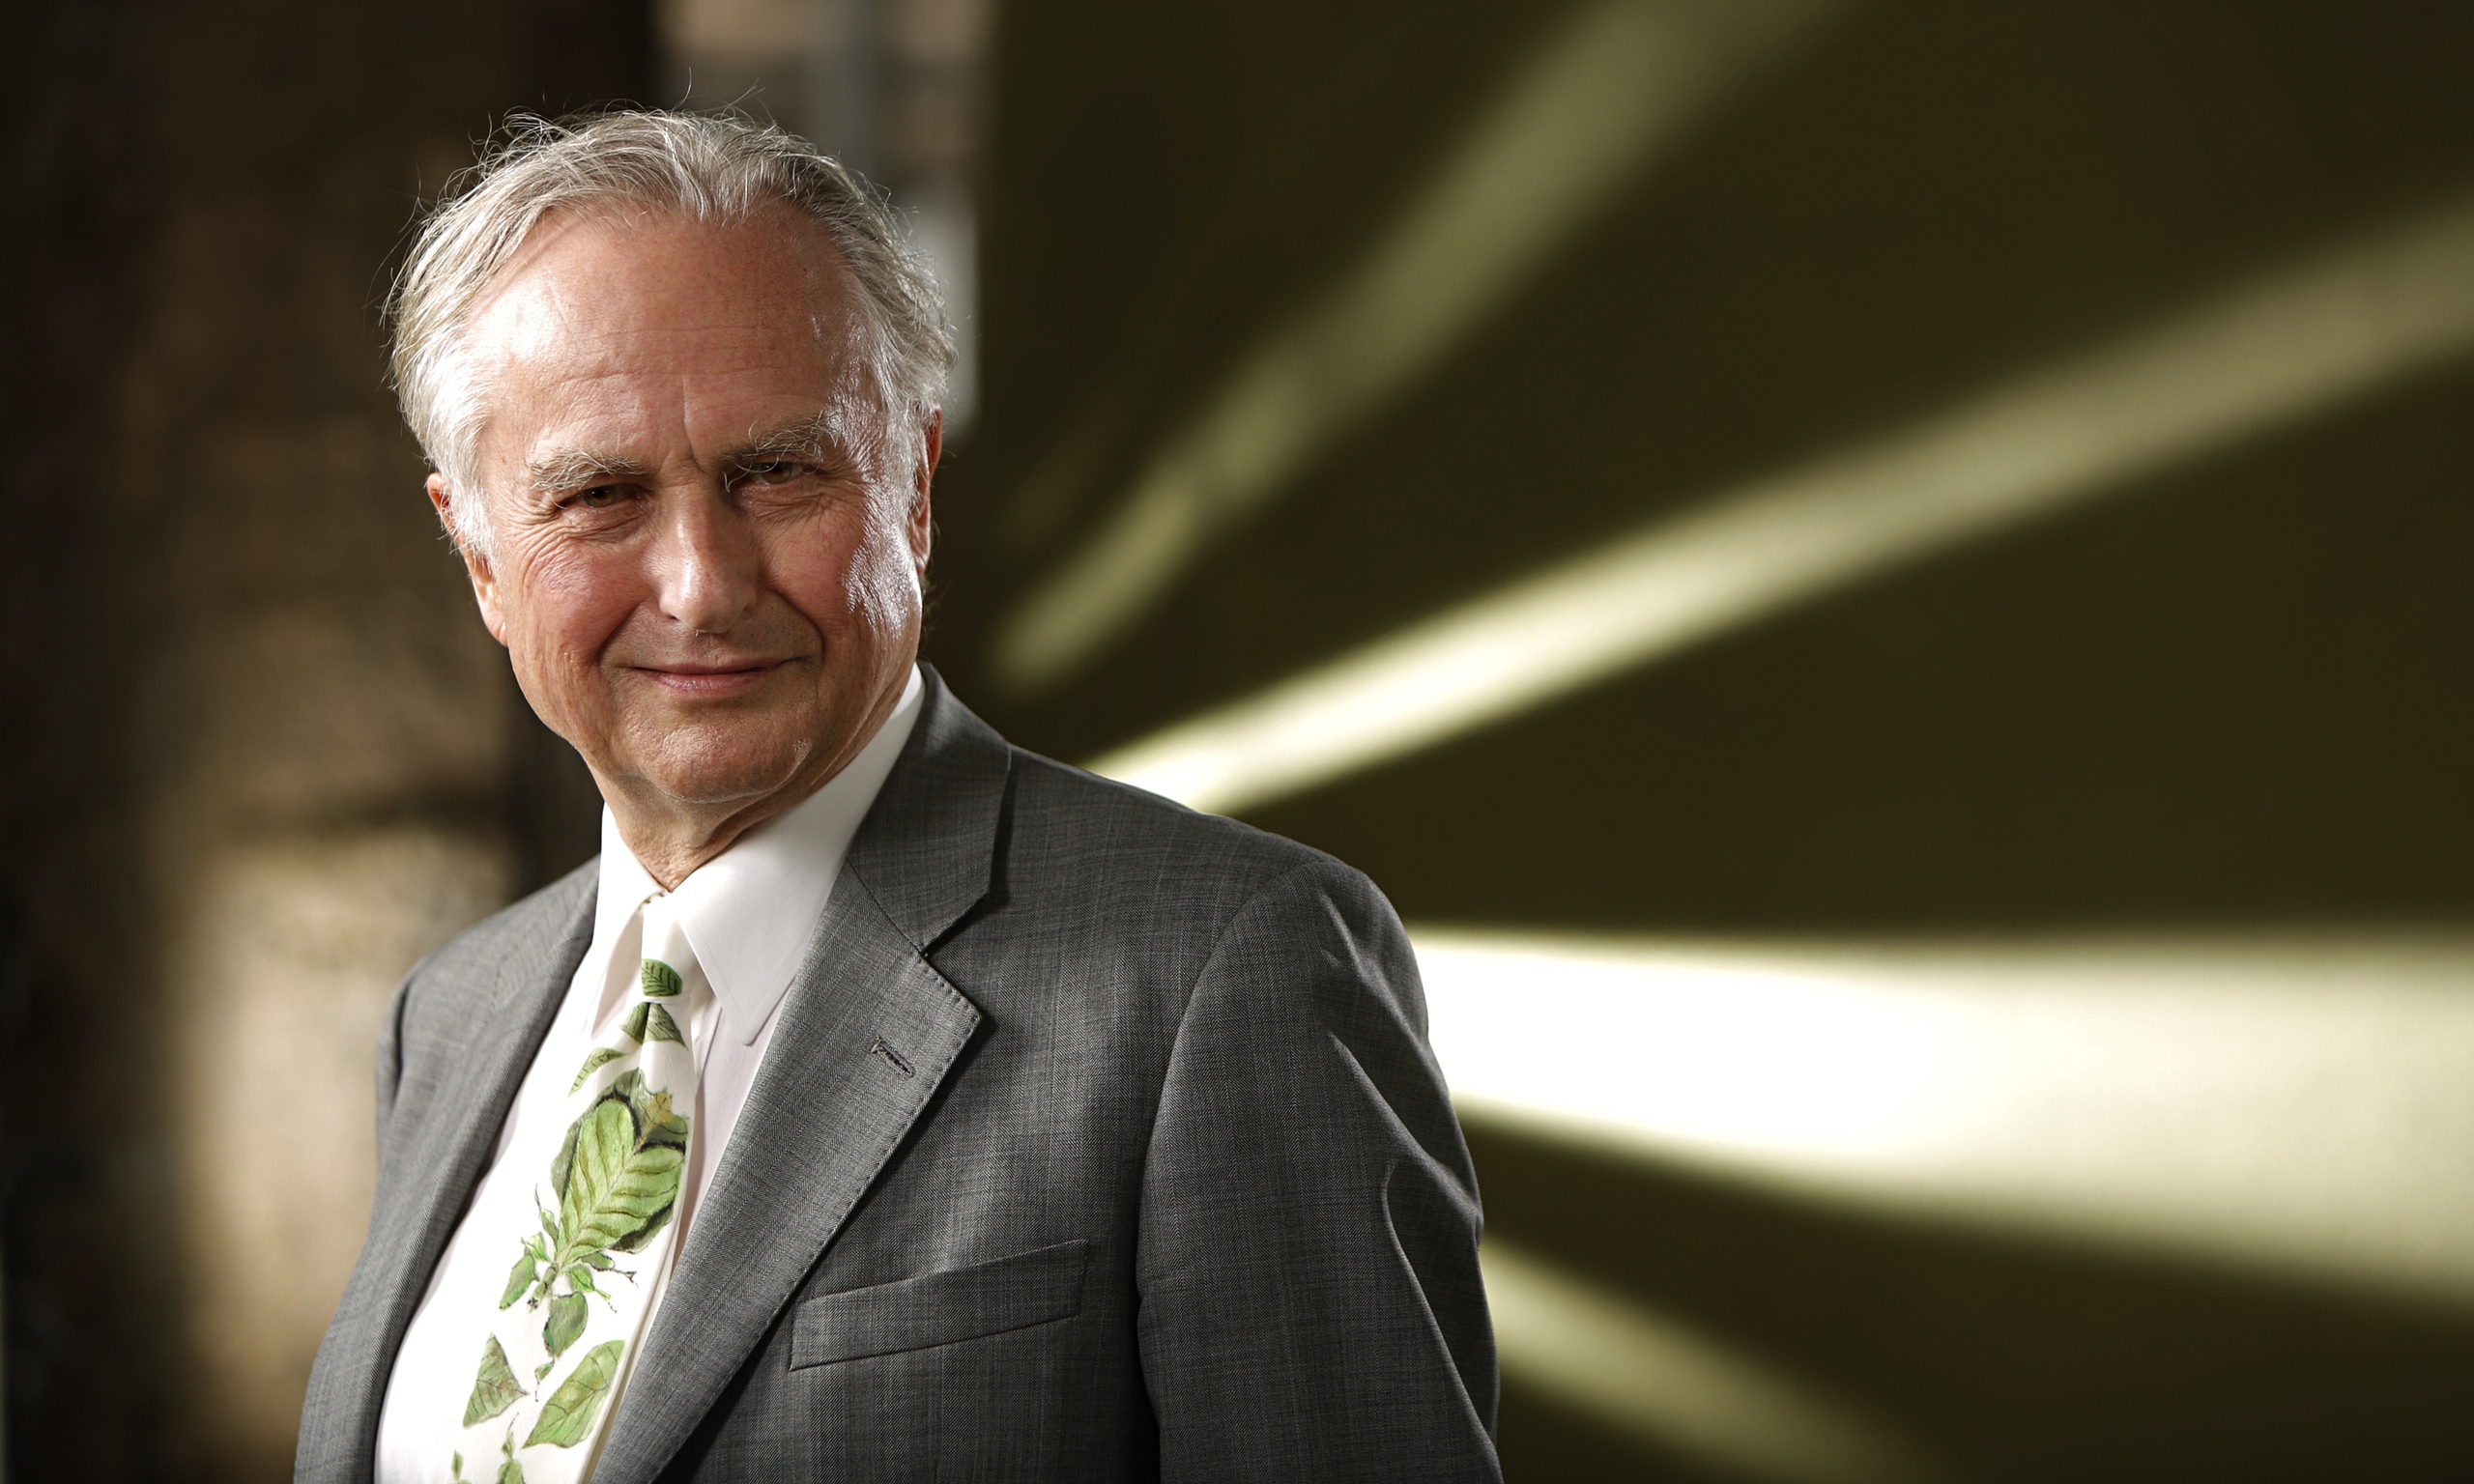 The insulting Richard Dawkins